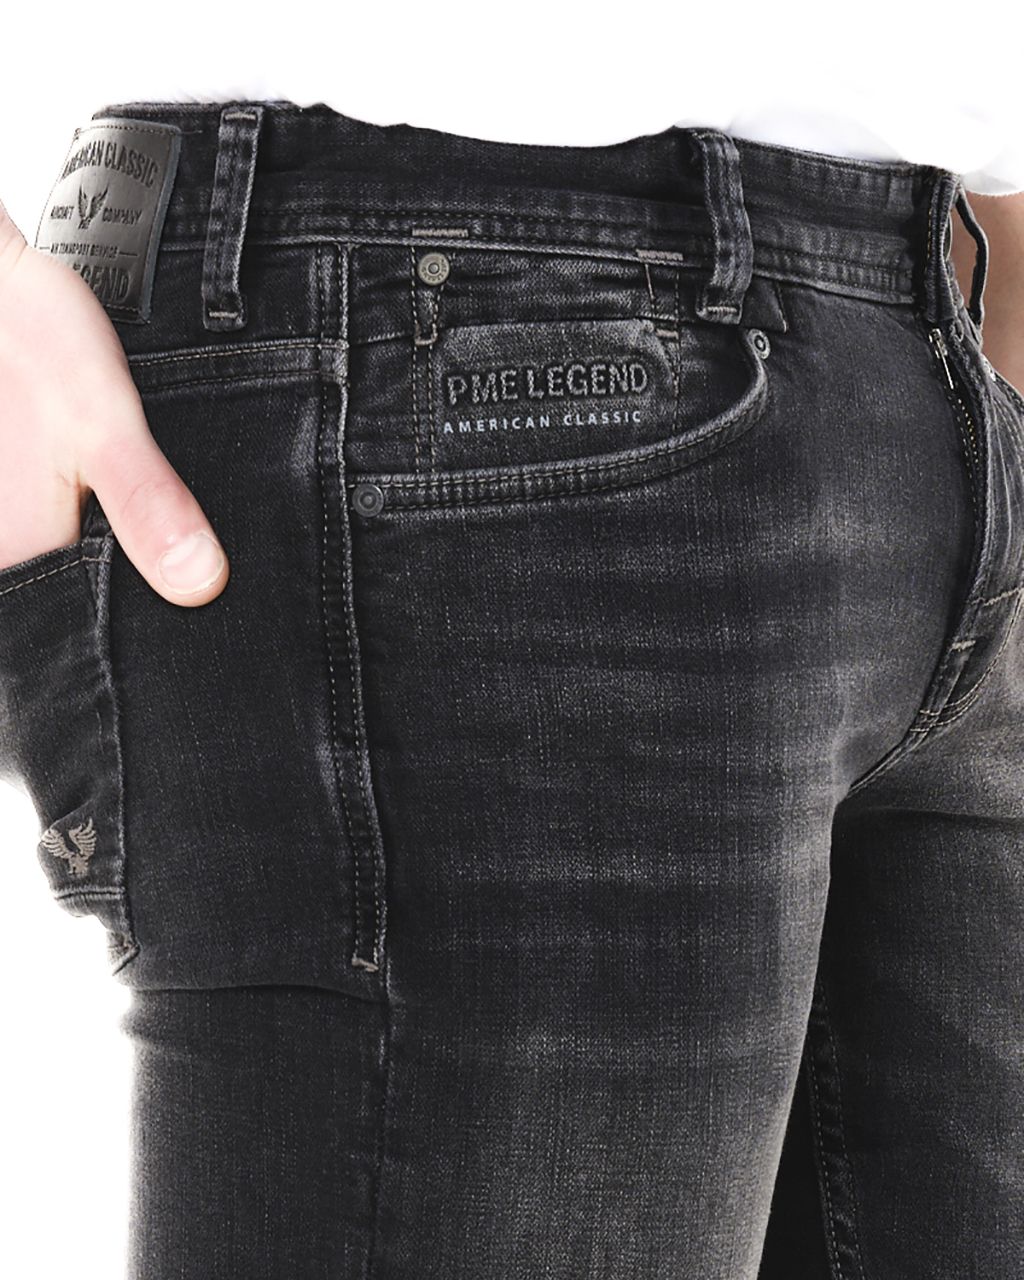 kan niet zien kans Noodlottig PME Legend Freighter Luxe Jeans | Shop nu - Only for Men